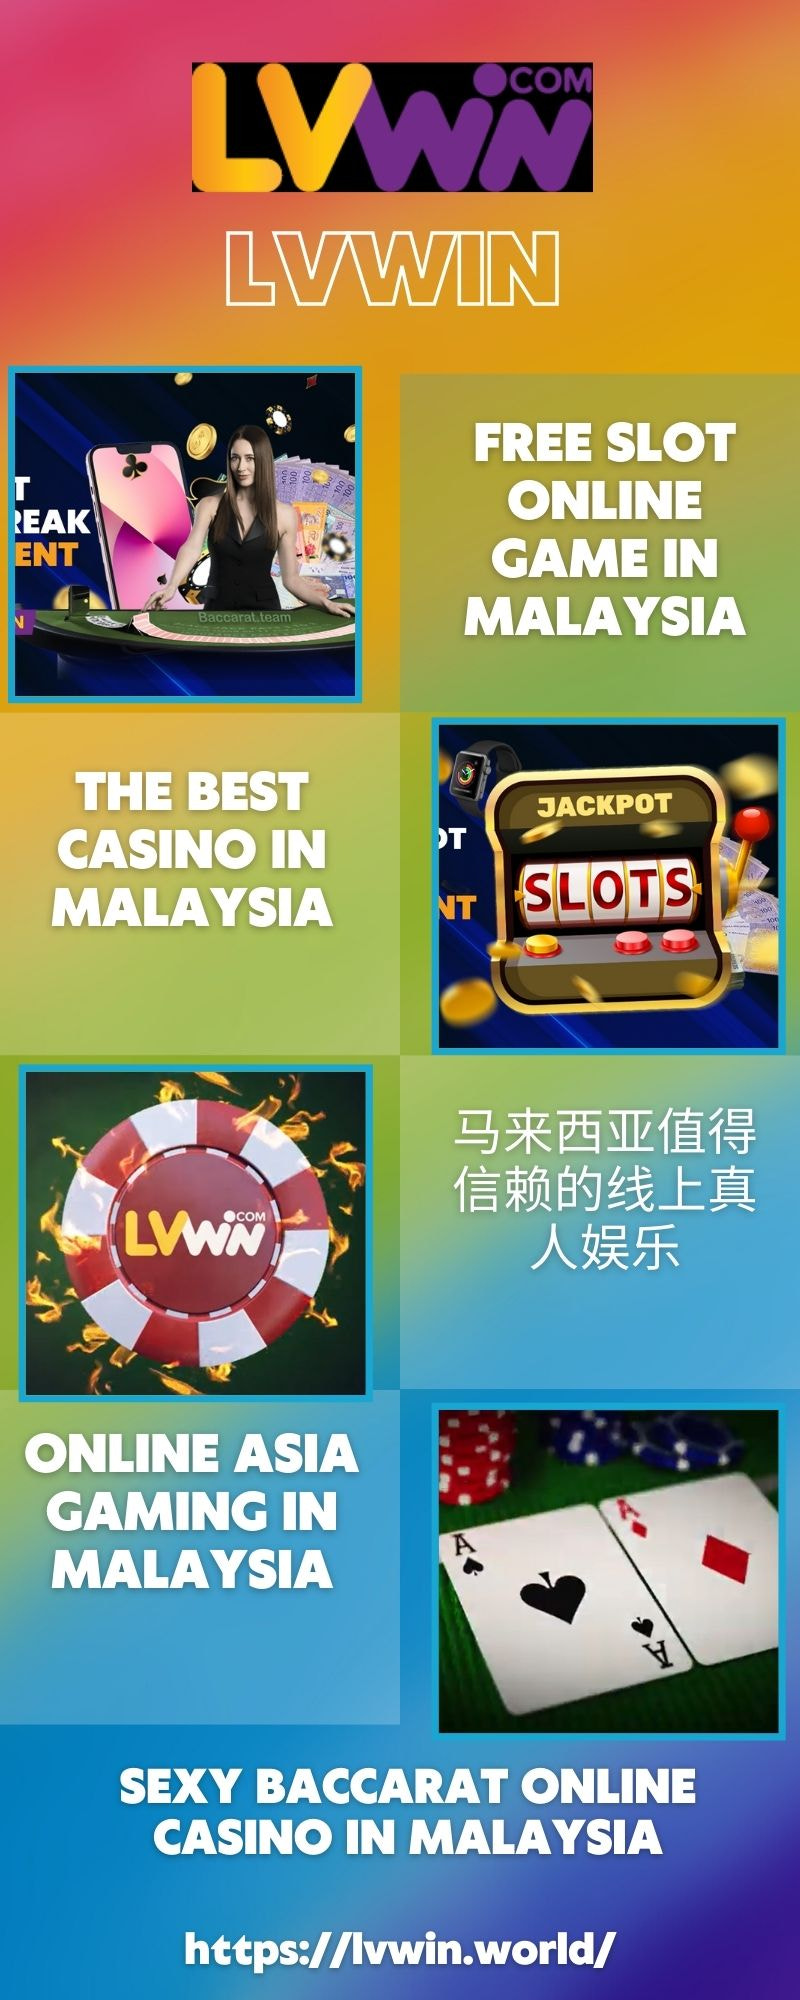 Playtech casino in Malaysia - The best Casino in Malaysia